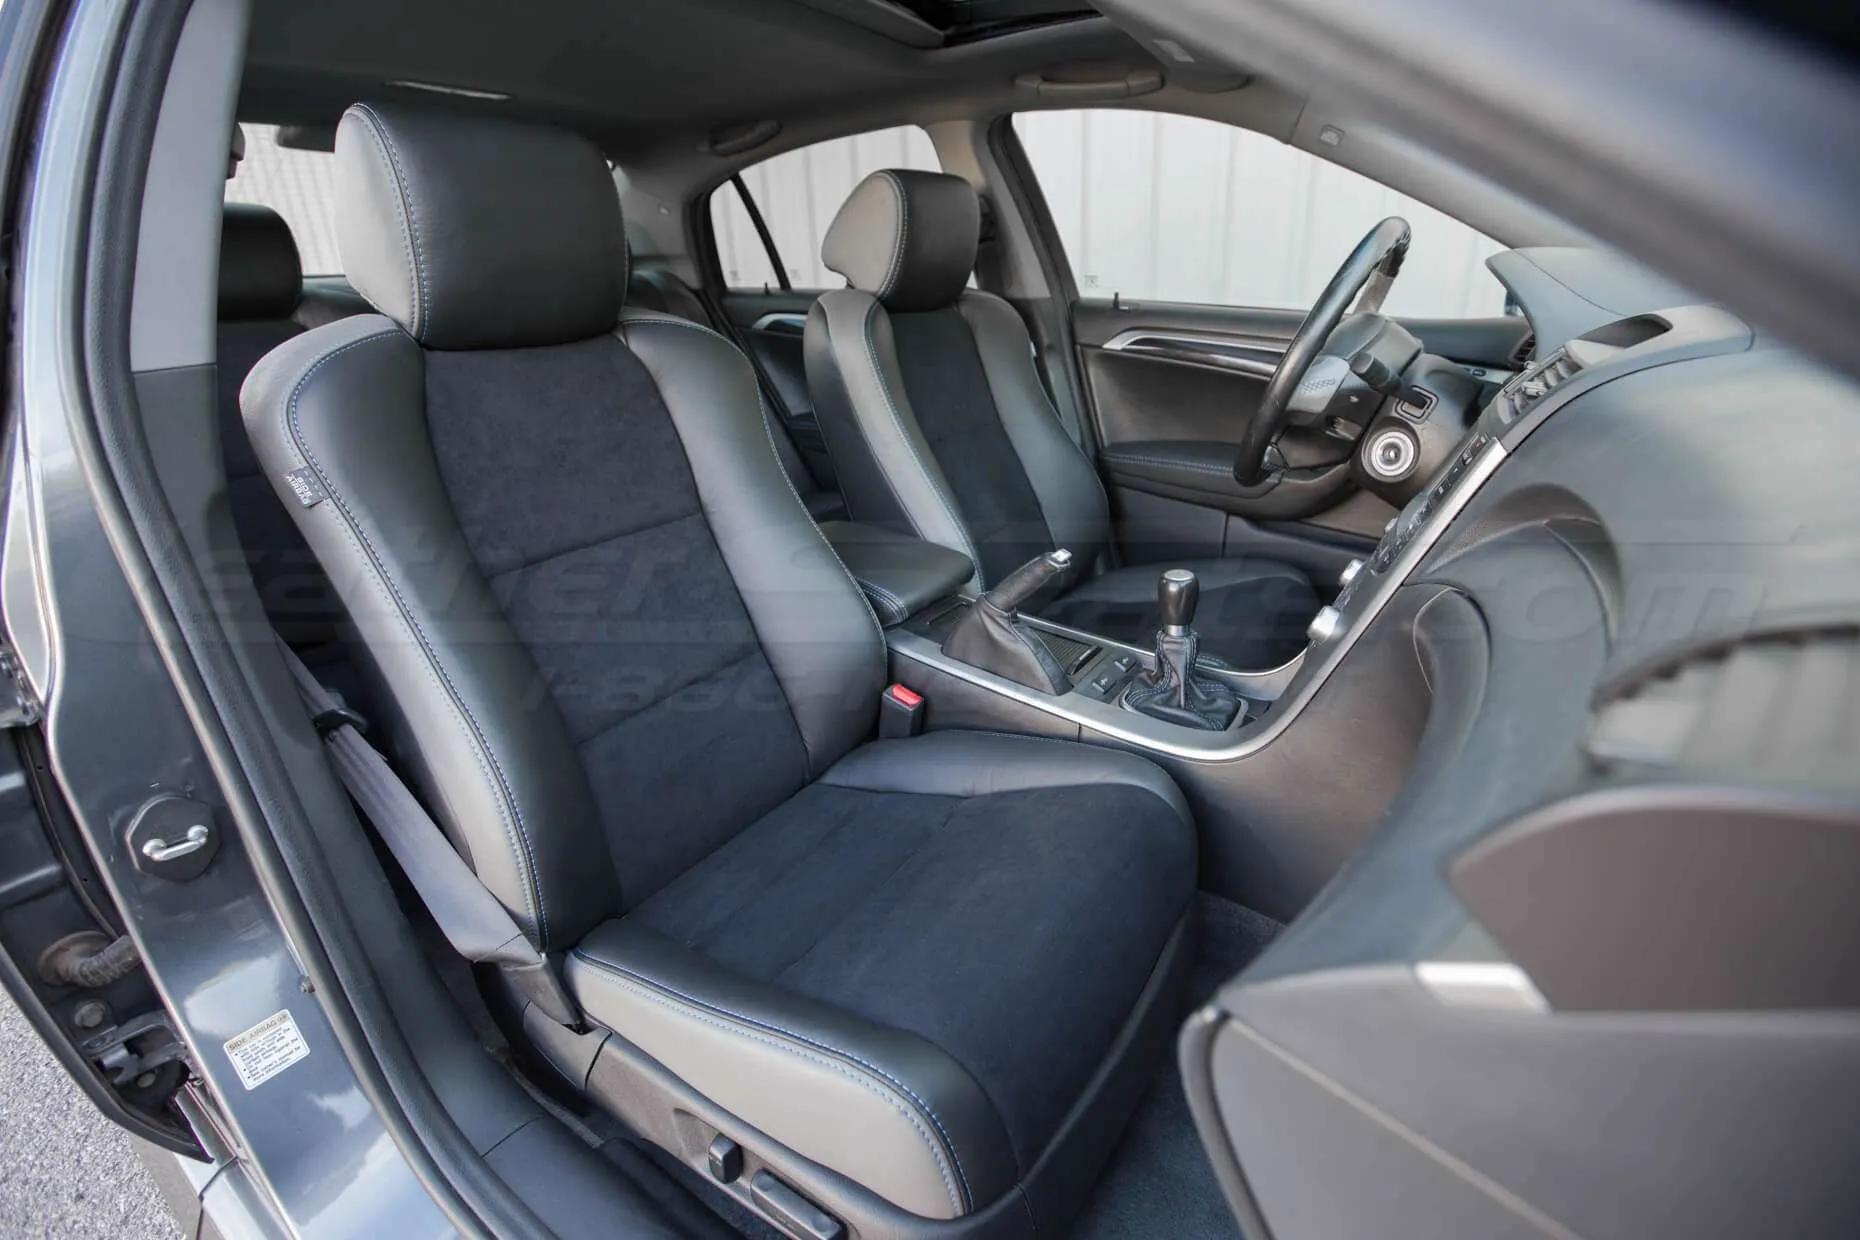 Installed upholstery kit - Passenger side view - 04- 08 Acura TL Black, Black Suede & Light Grey Kit